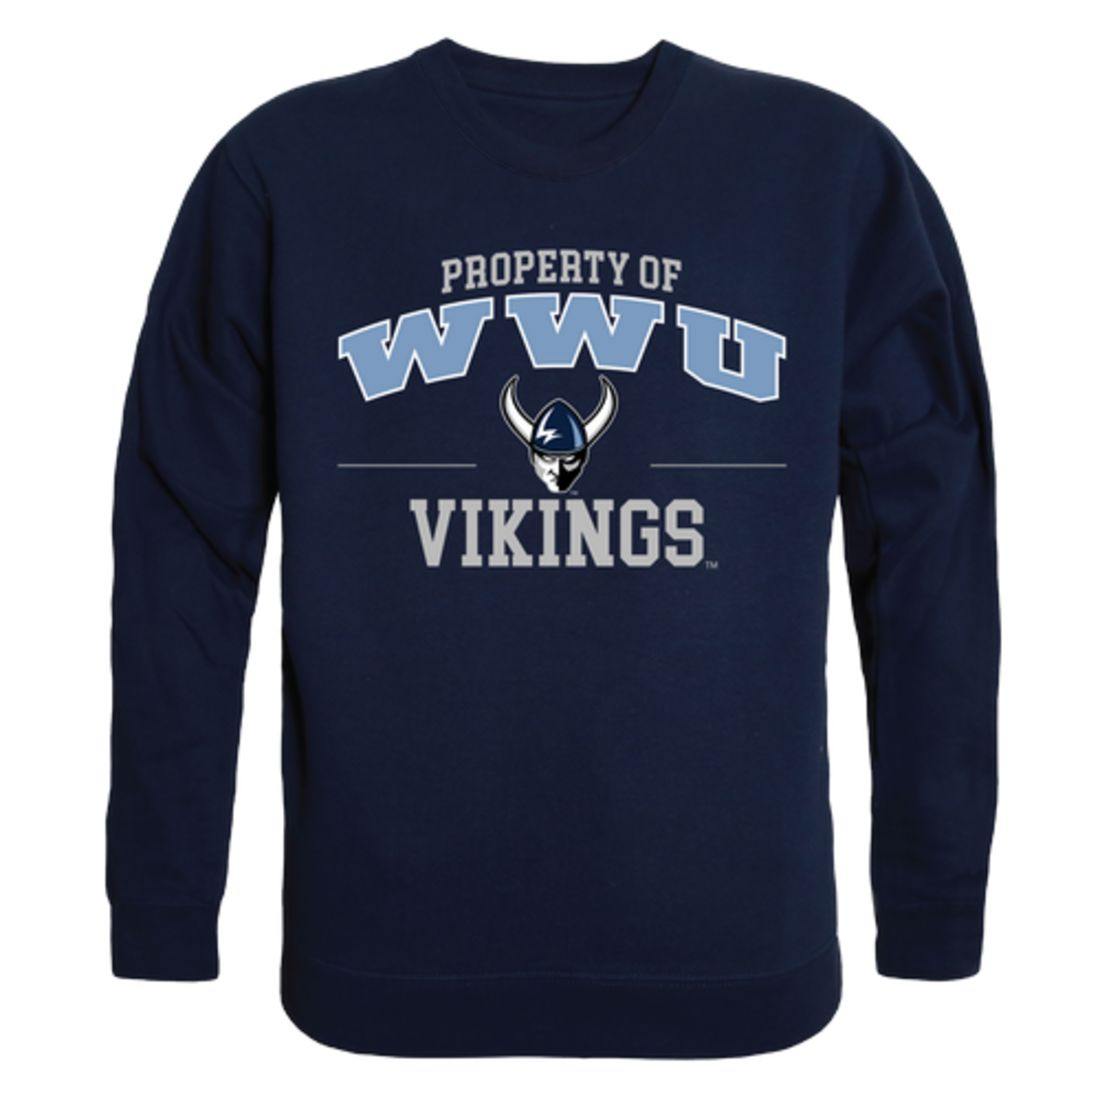 WWU Western Washington University Vikings Property Crewneck Pullover Sweatshirt Sweater Navy-Campus-Wardrobe